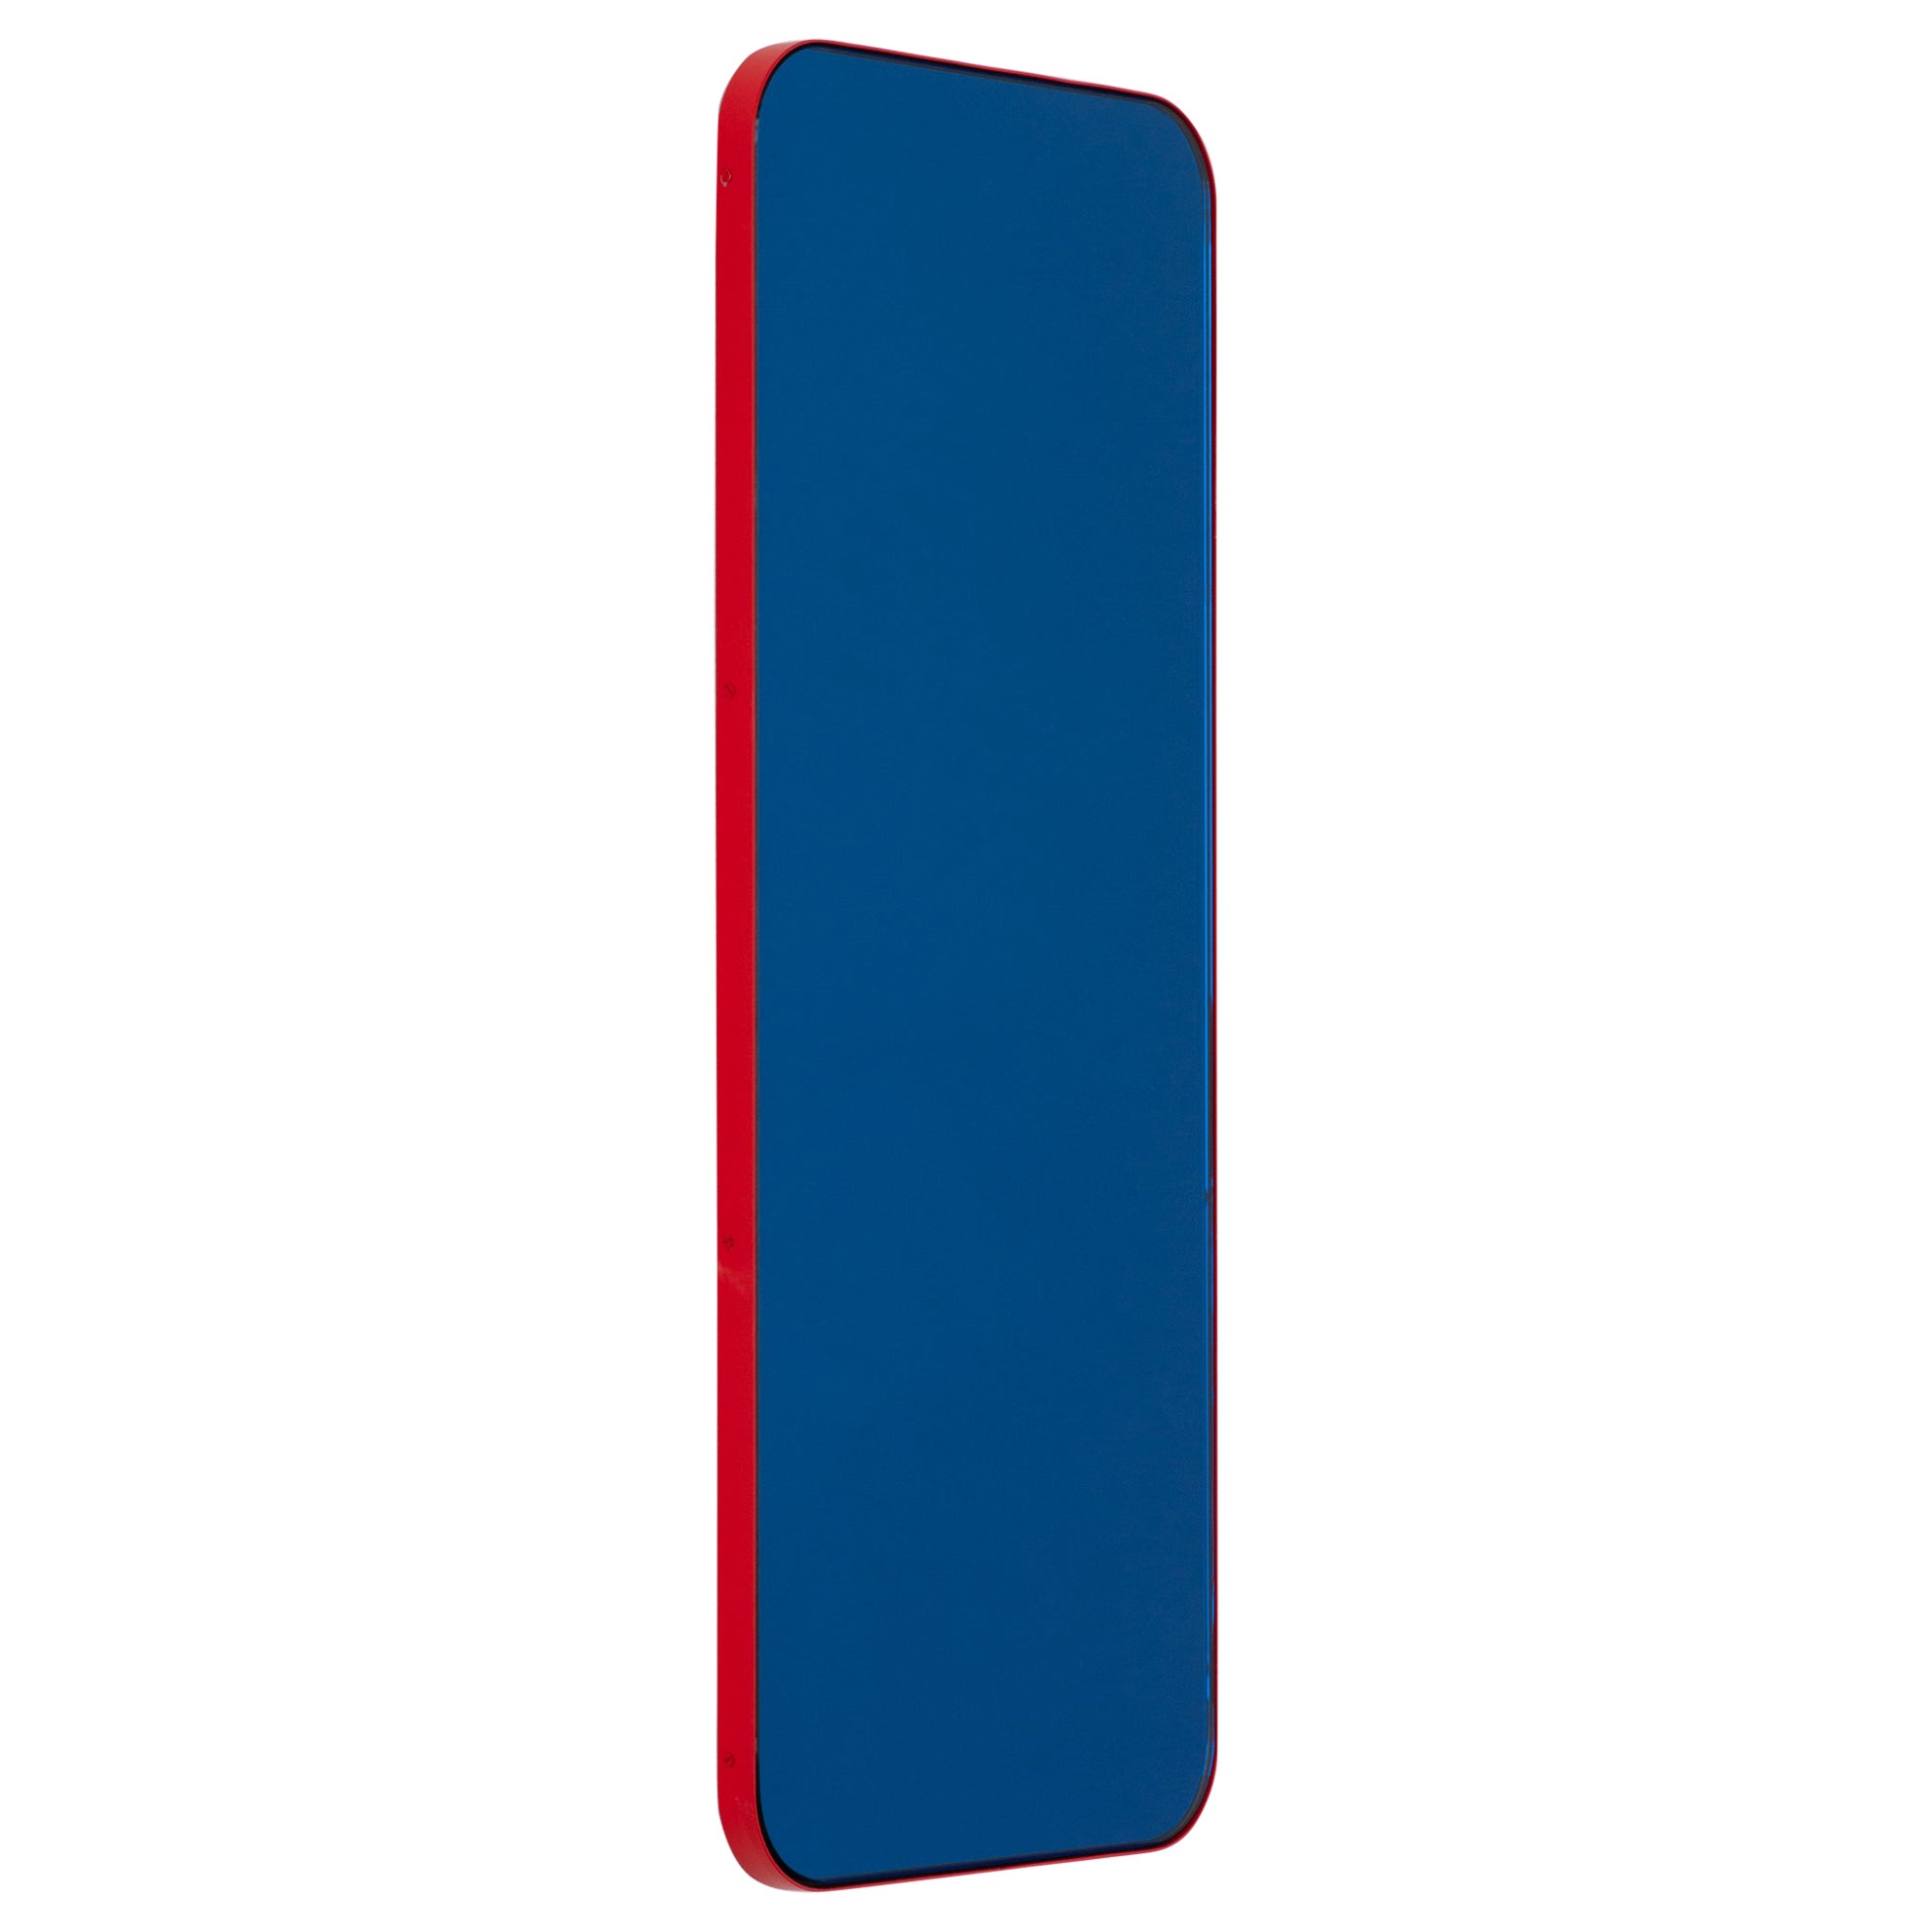 Quadris Rectangular Contemporary Blue Mirror with a Red Frame, XL For Sale